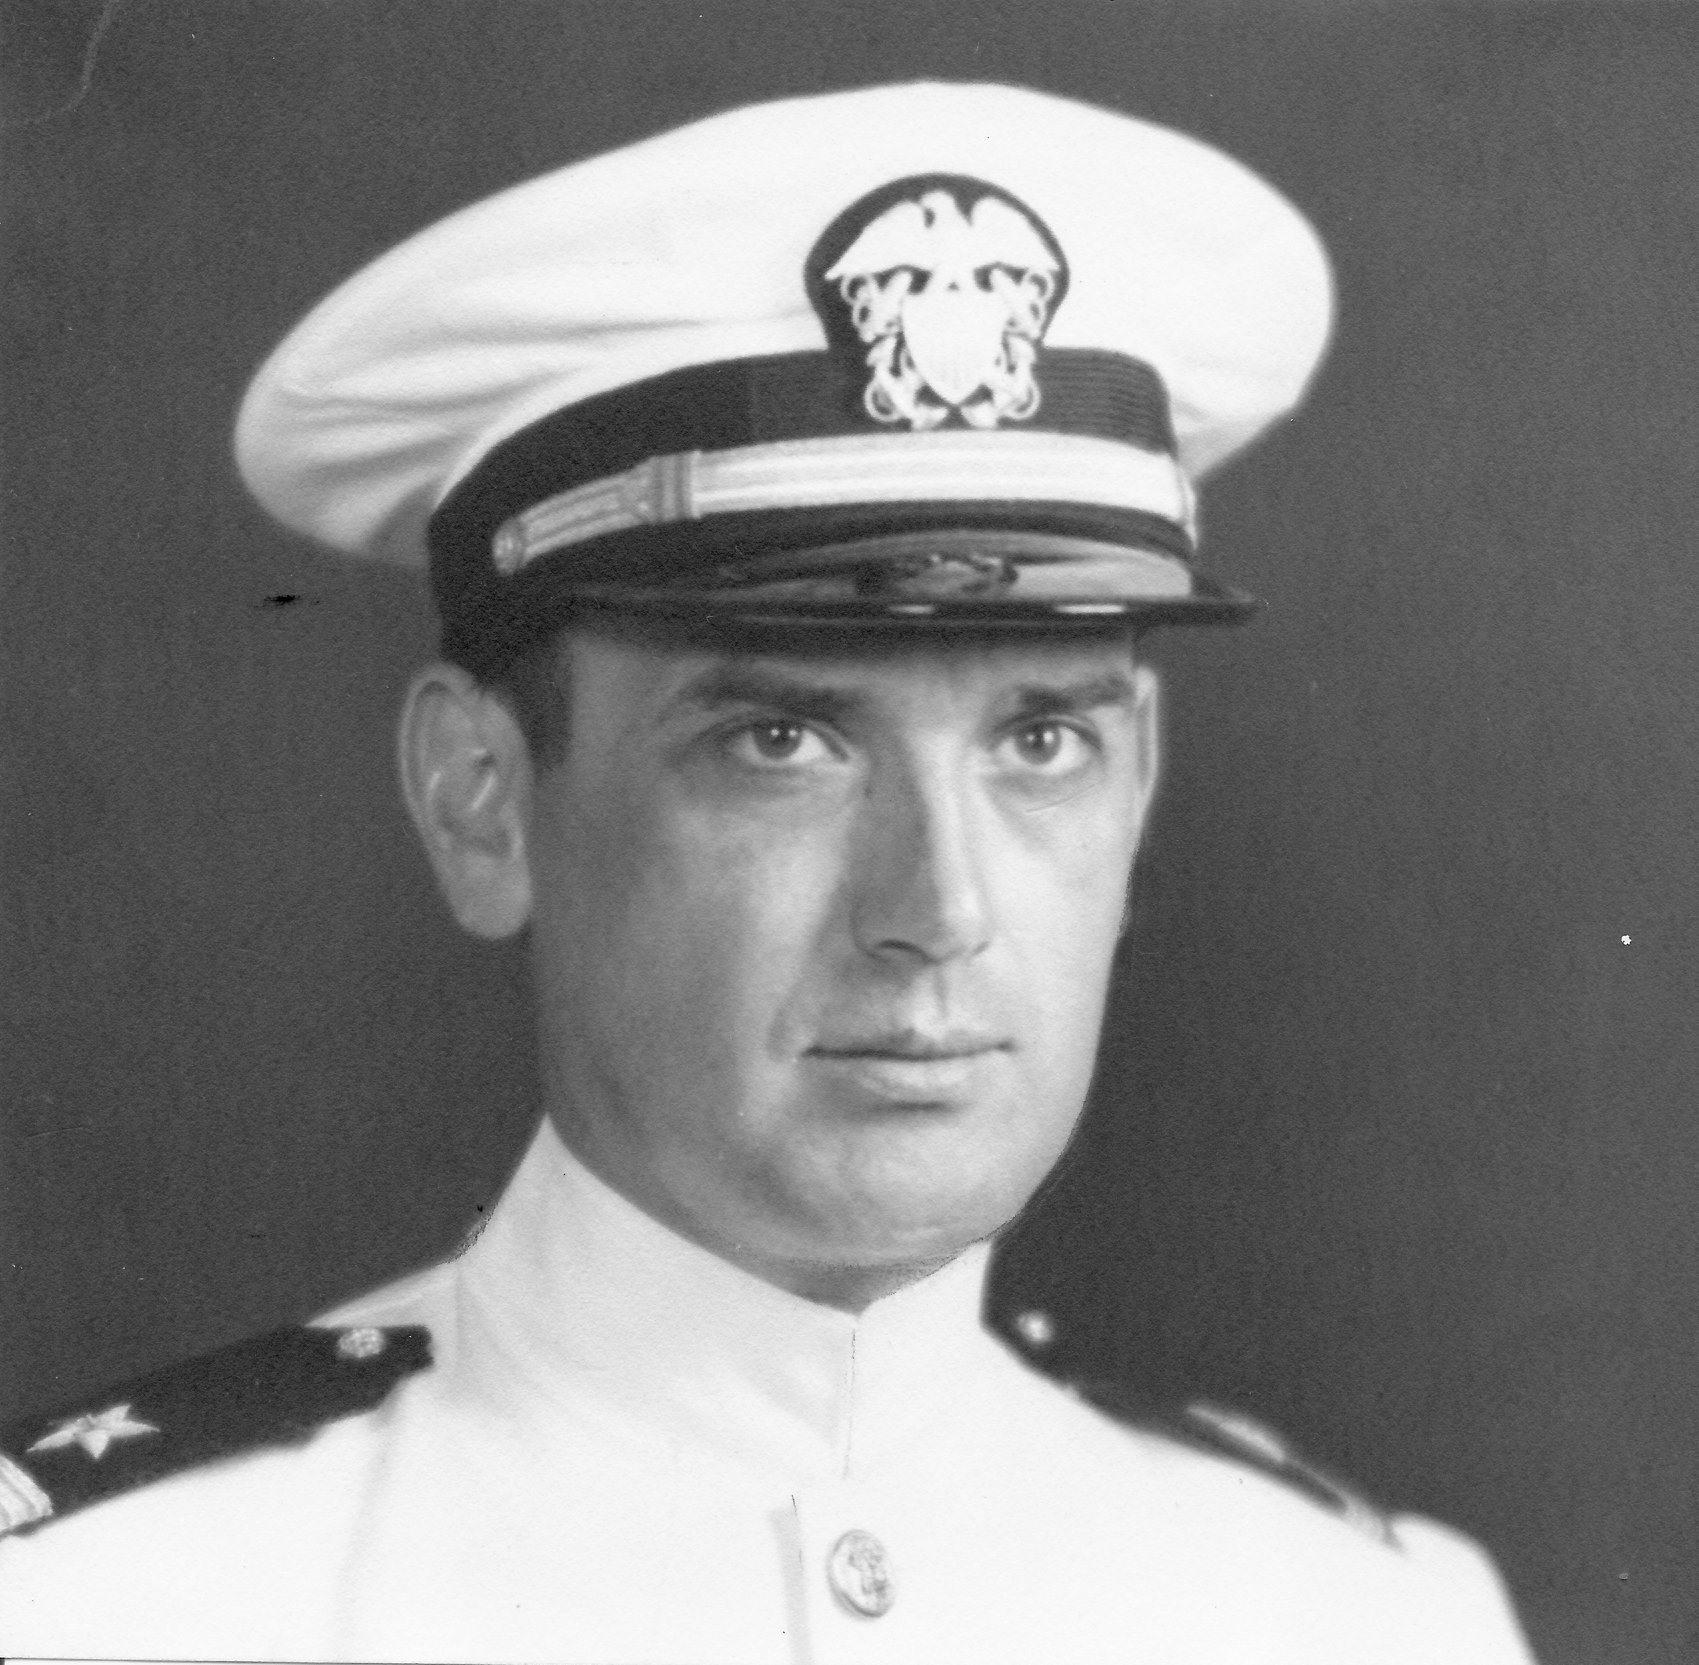 Lt. Frank X. Kilroy